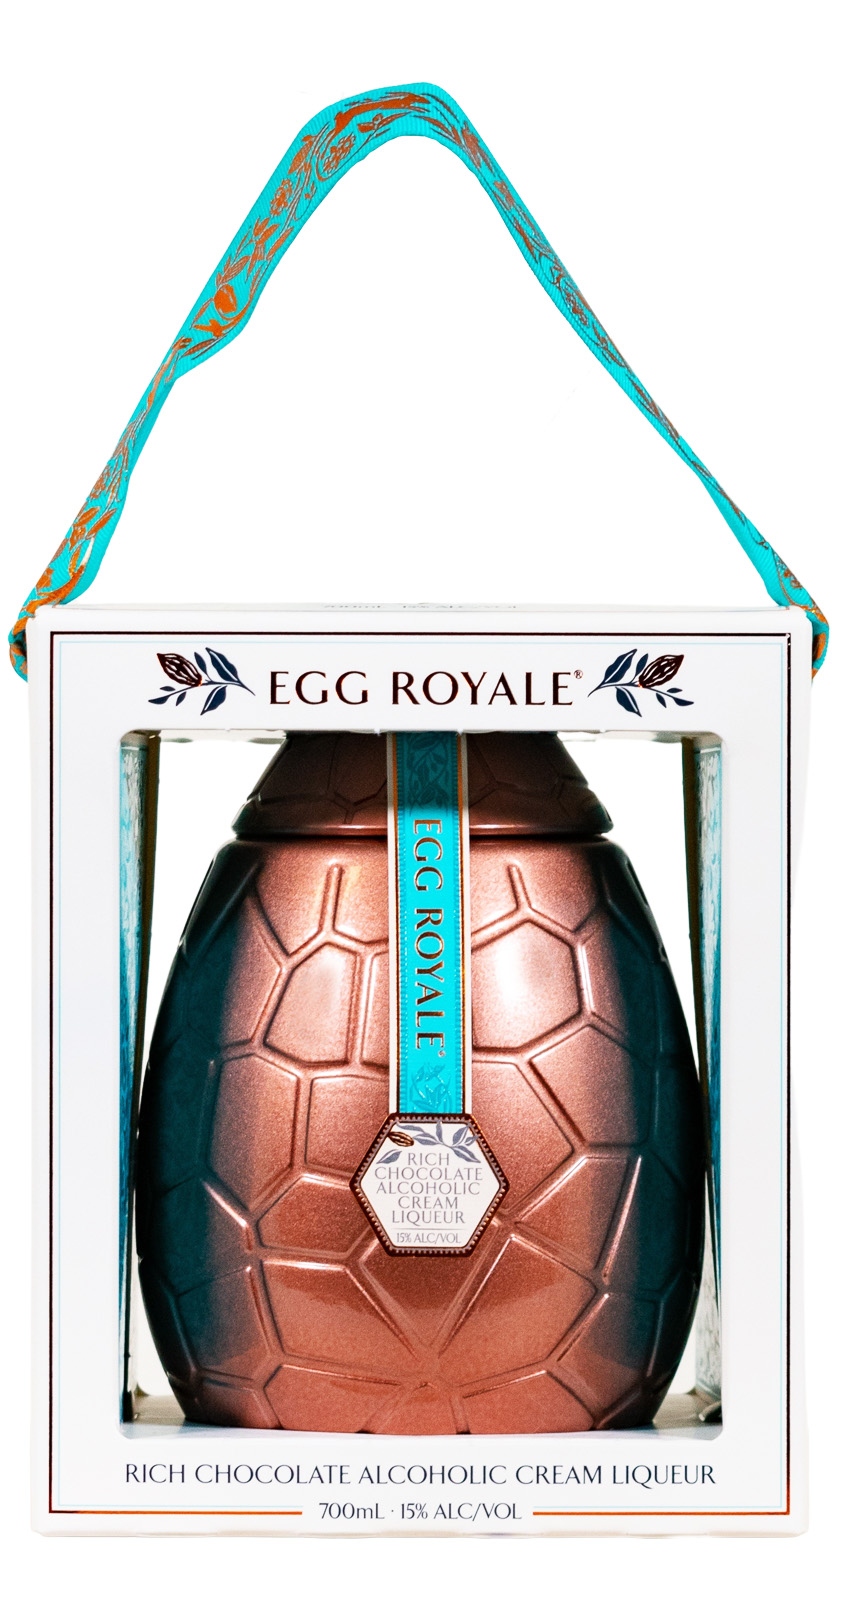 Egg Royale Schokoladen günstig kaufen